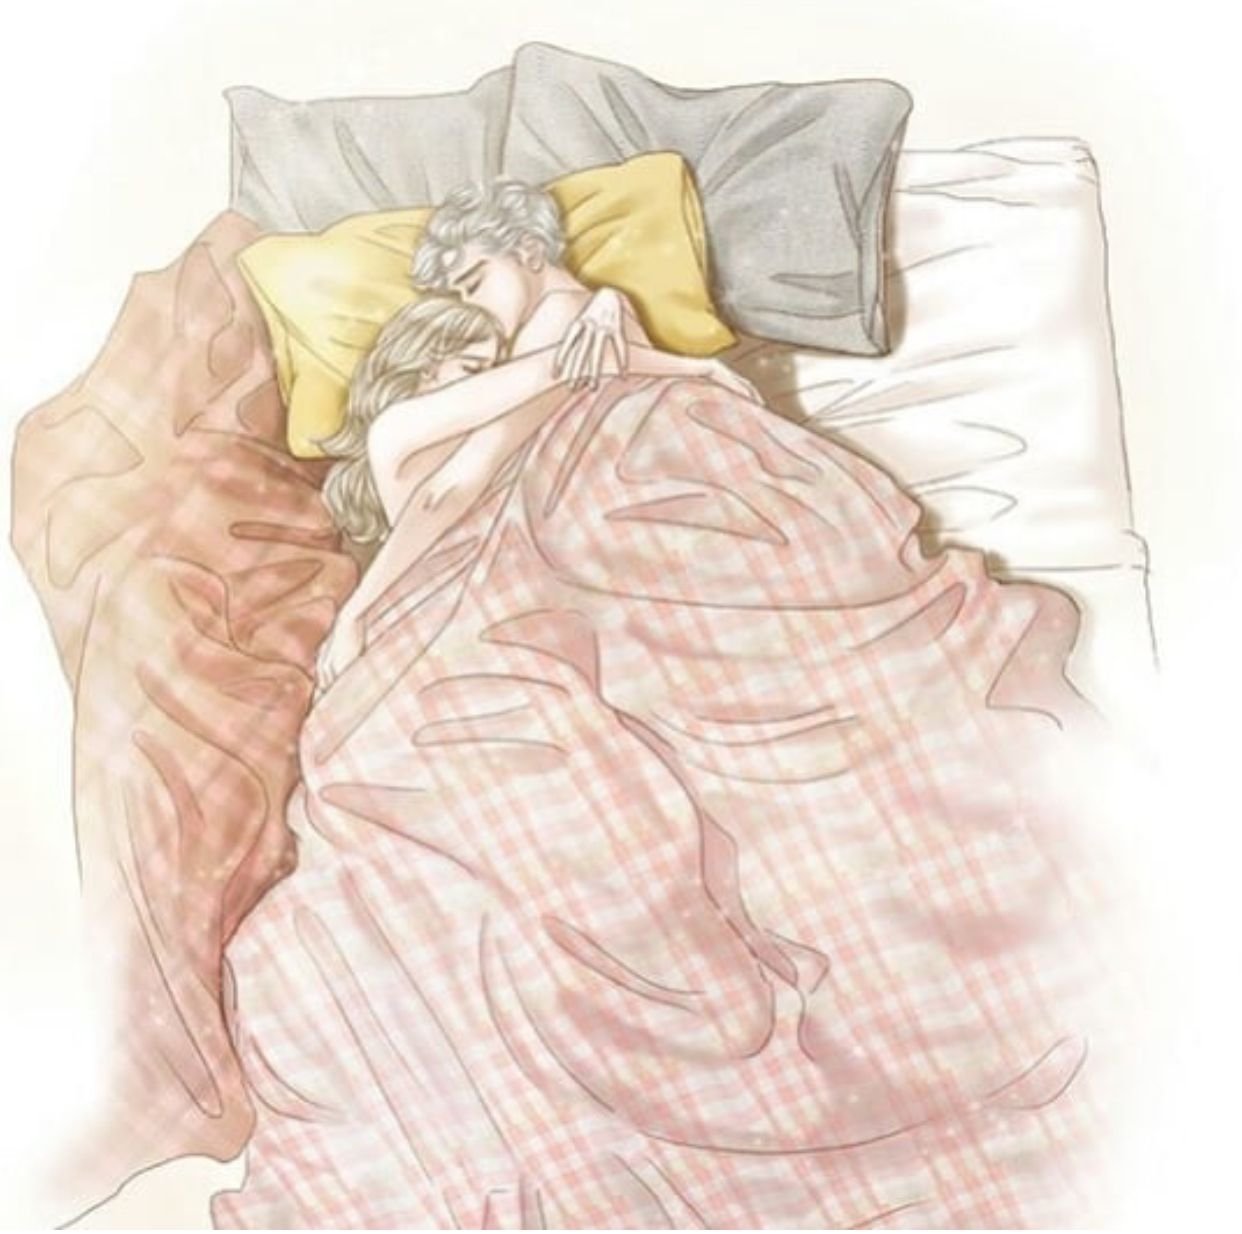 Мама друга уснула. Обнимает одеяло. Одеяло нарисованное. Под одеялом иллюстрация. Парочка под одеялом арт.